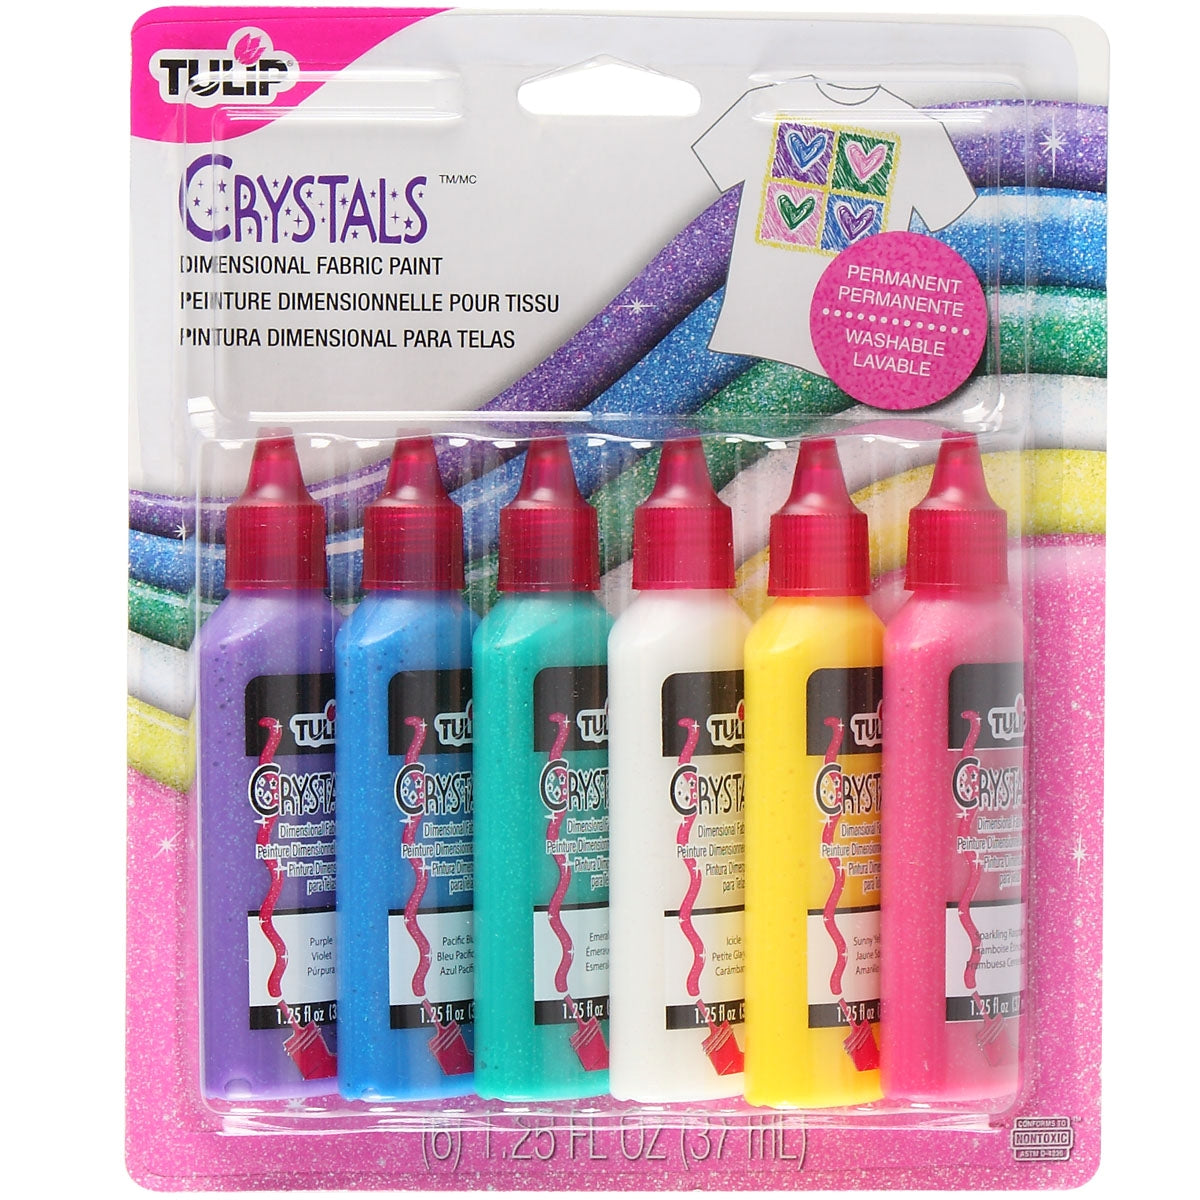 Tulip Dimensional Paint Crystals 1.25 fl oz 6 Pack - 1